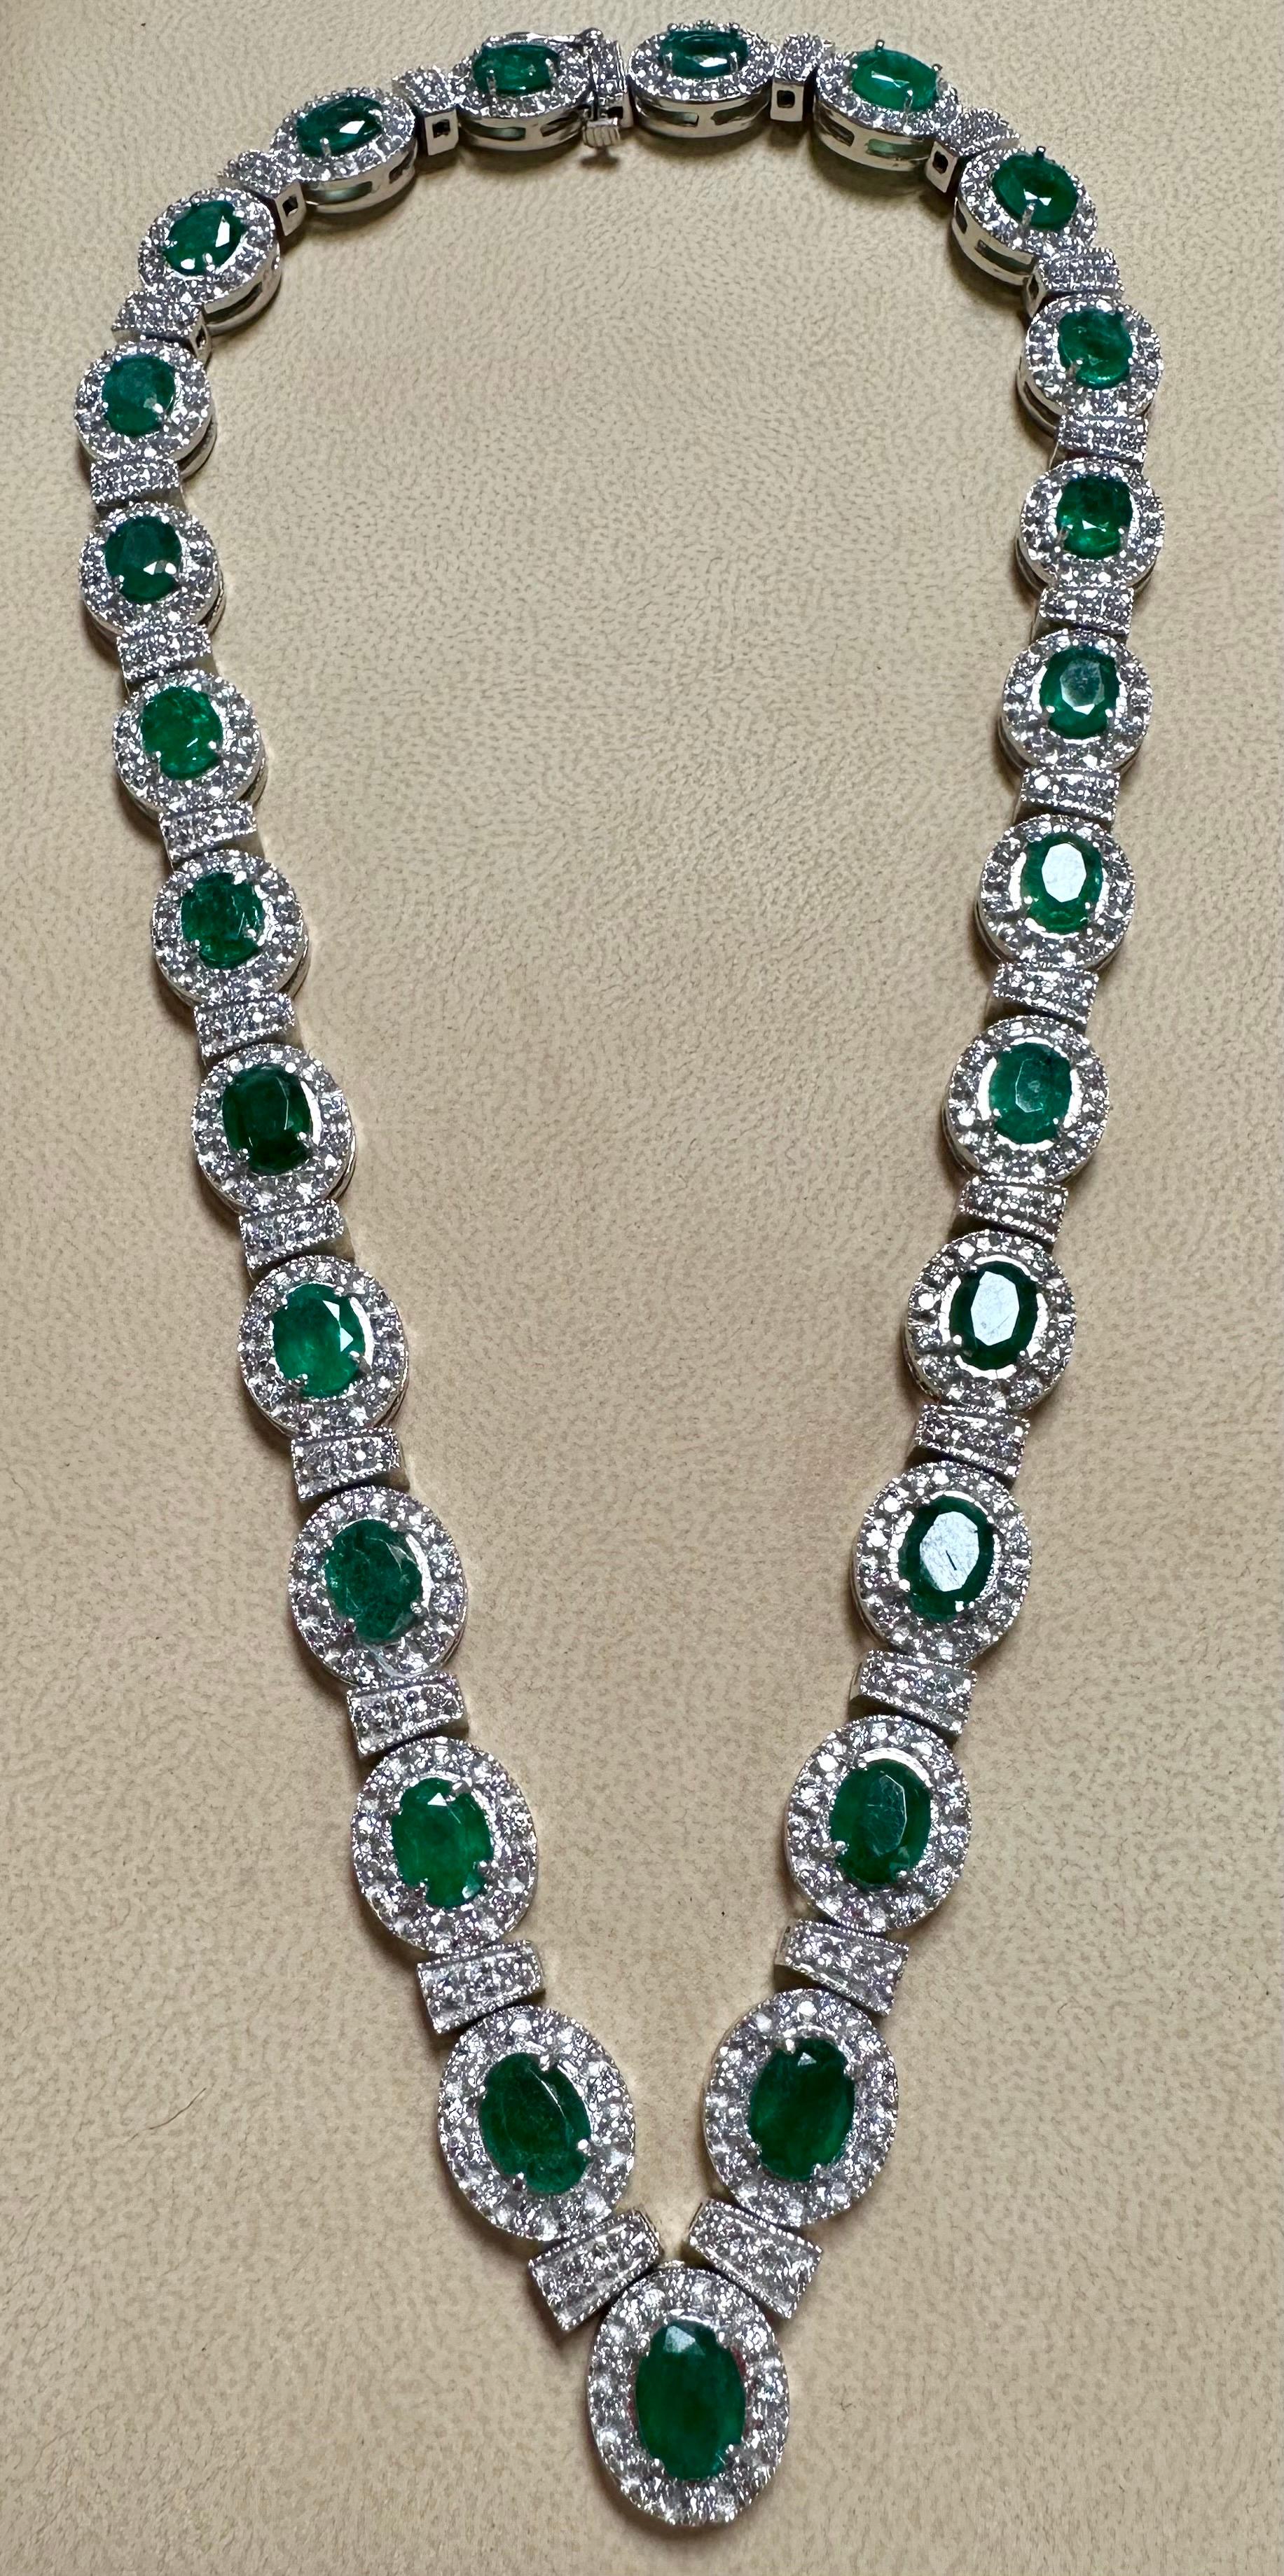 28 Carat Oval Shape Natural Emerald & 5 Carat Diamond Necklace in 14 Karat Gold For Sale 7